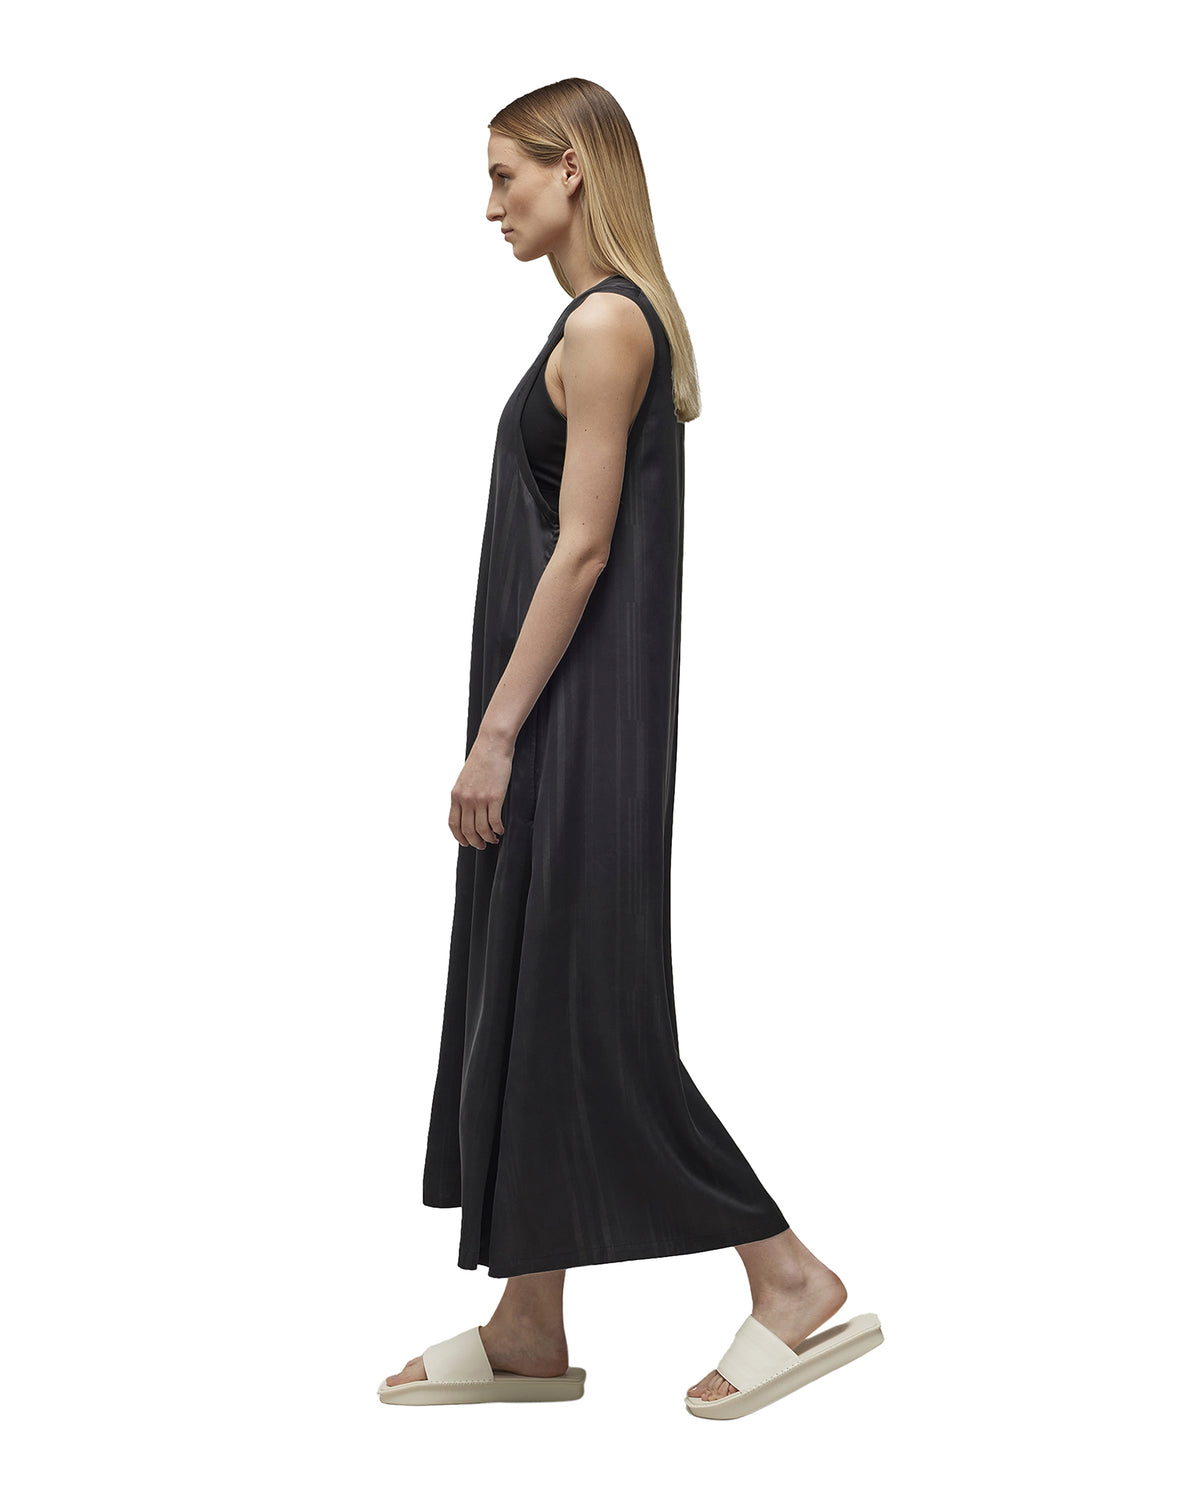 adidas Y-3 | Women's 3S Dress Black - Concrete